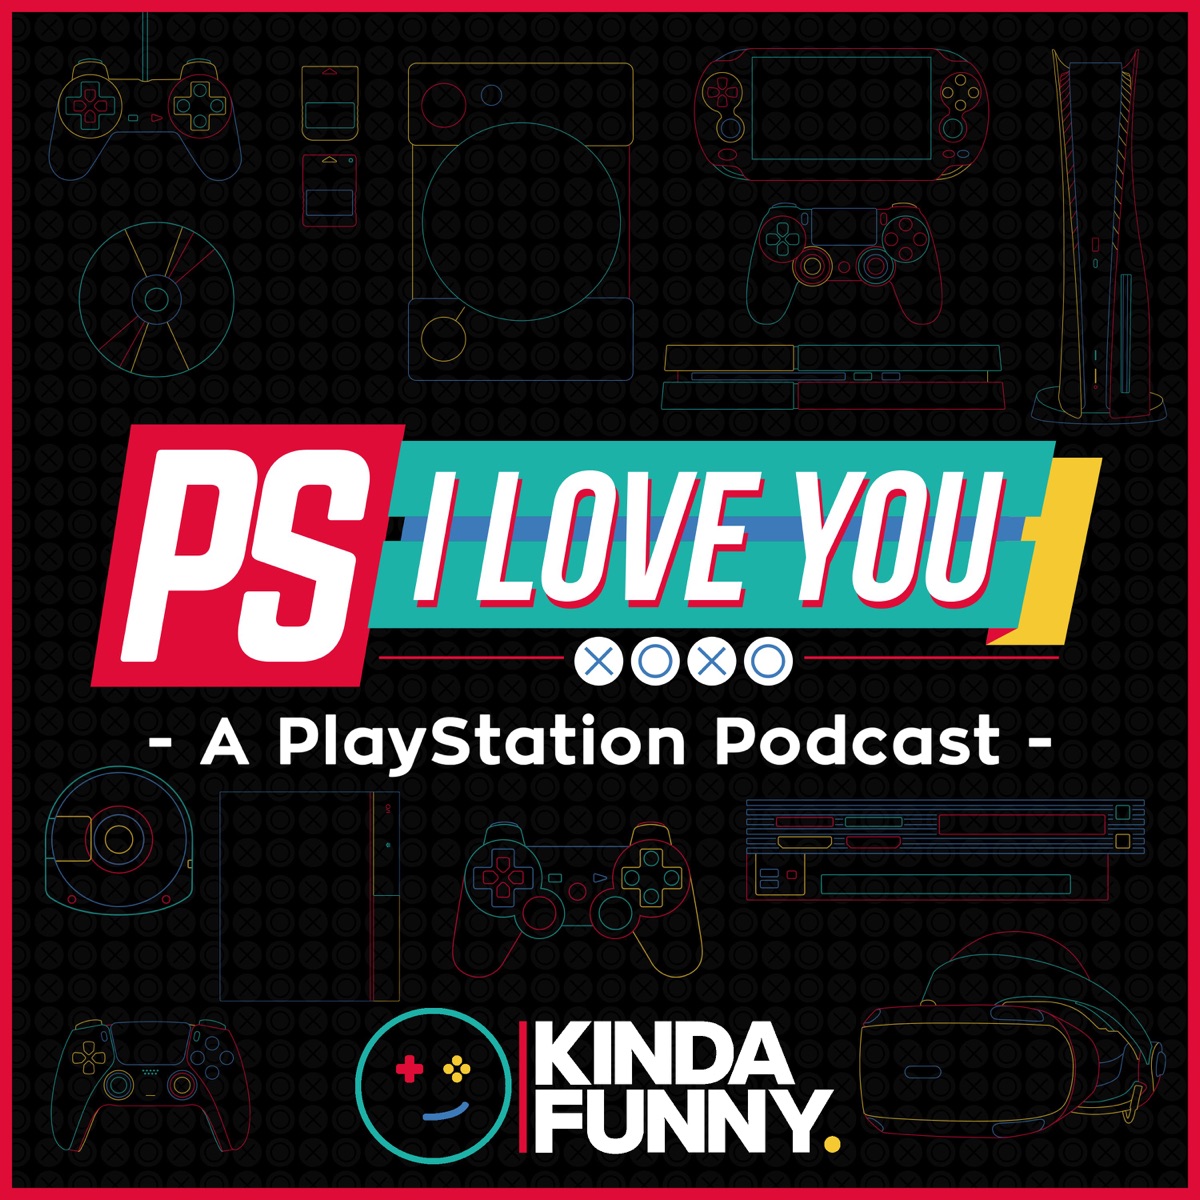 10 New Upcoming PSVR2 Games  PlayStation VR2 Showcase Episode 3 